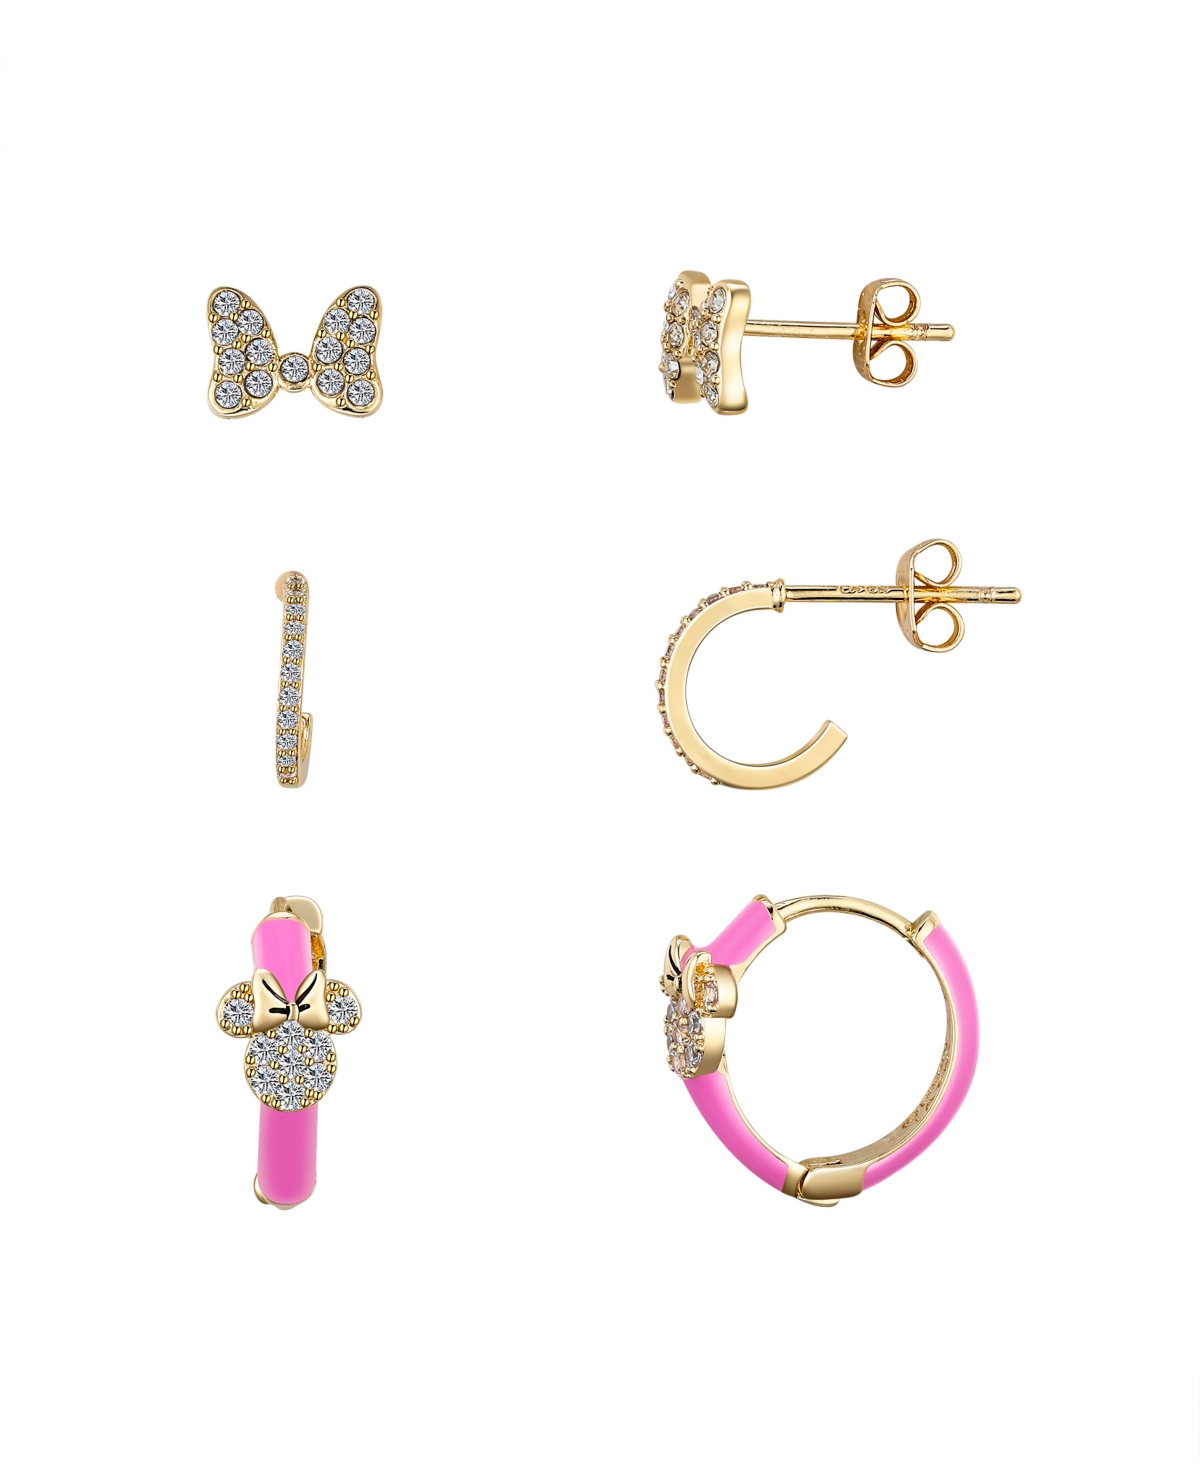 Cubic Zirconia Hoop, Pink Enamel Hoop, and Crystal Bow Minnie Mouse Earring Set - Gold